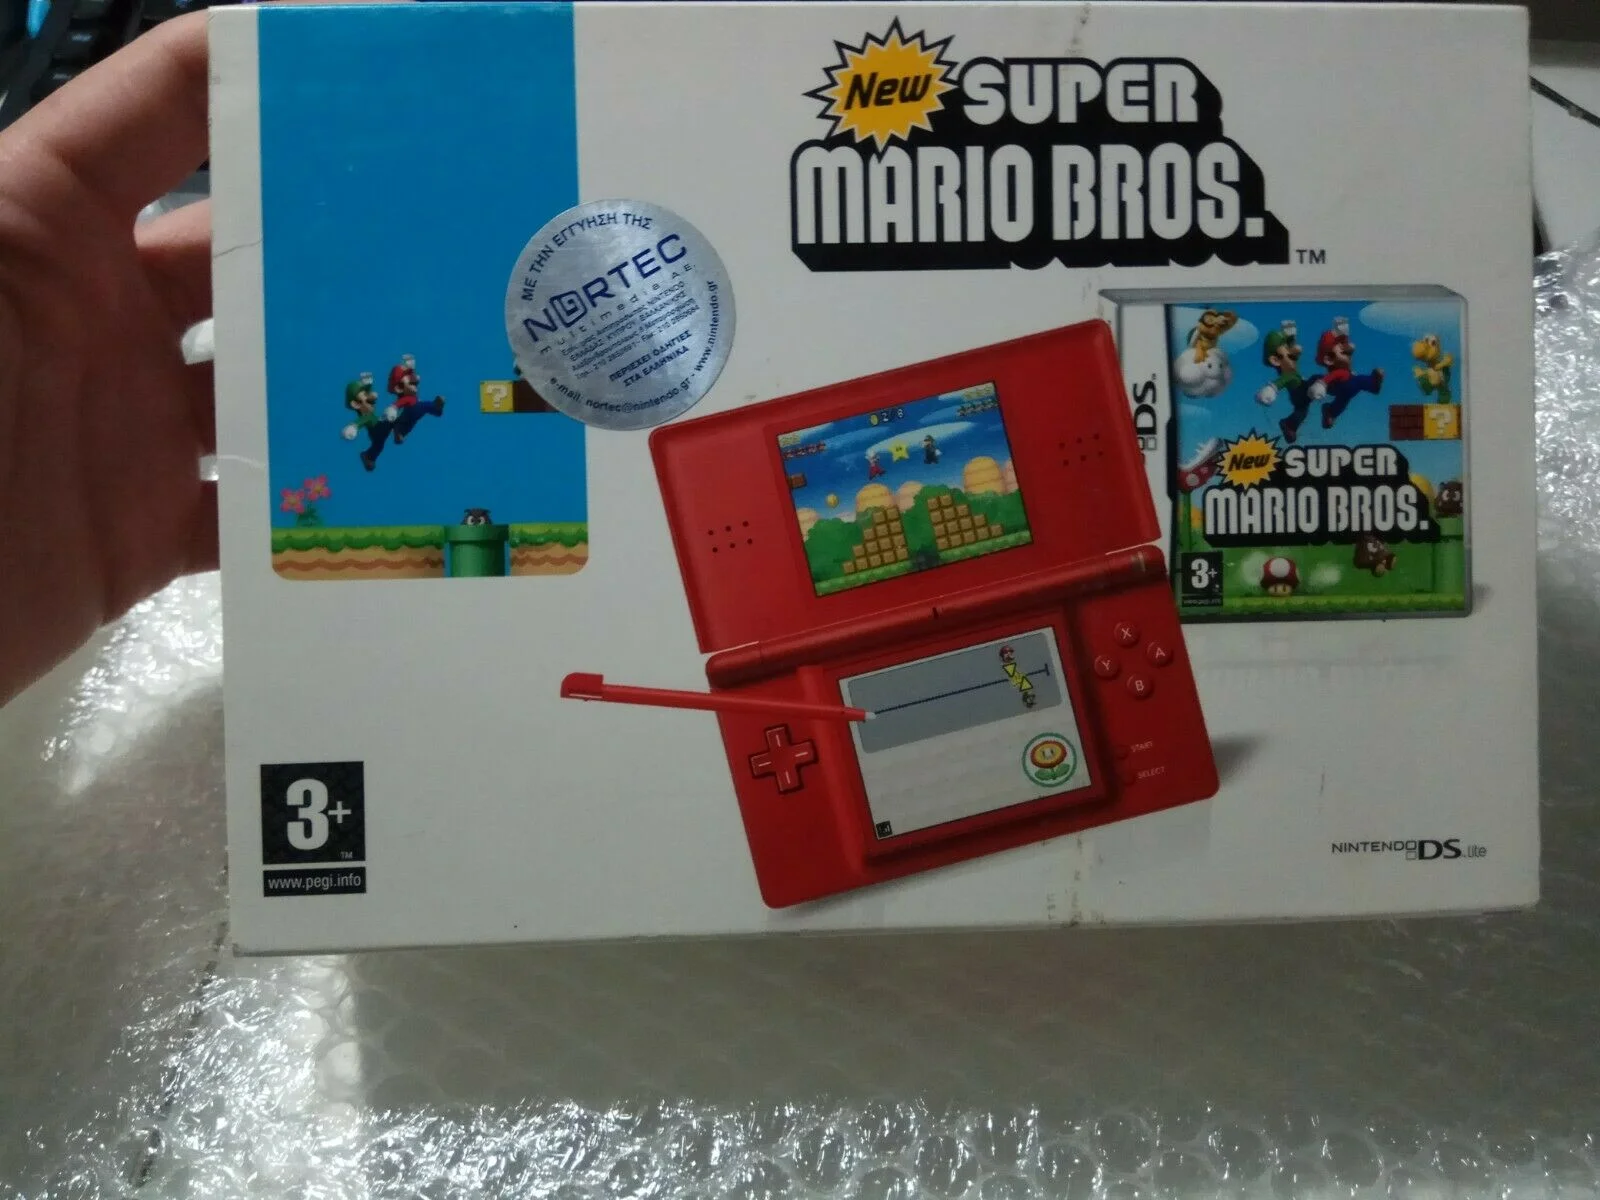  Nintendo DS Lite Red + New Super Mario Bros Bundle